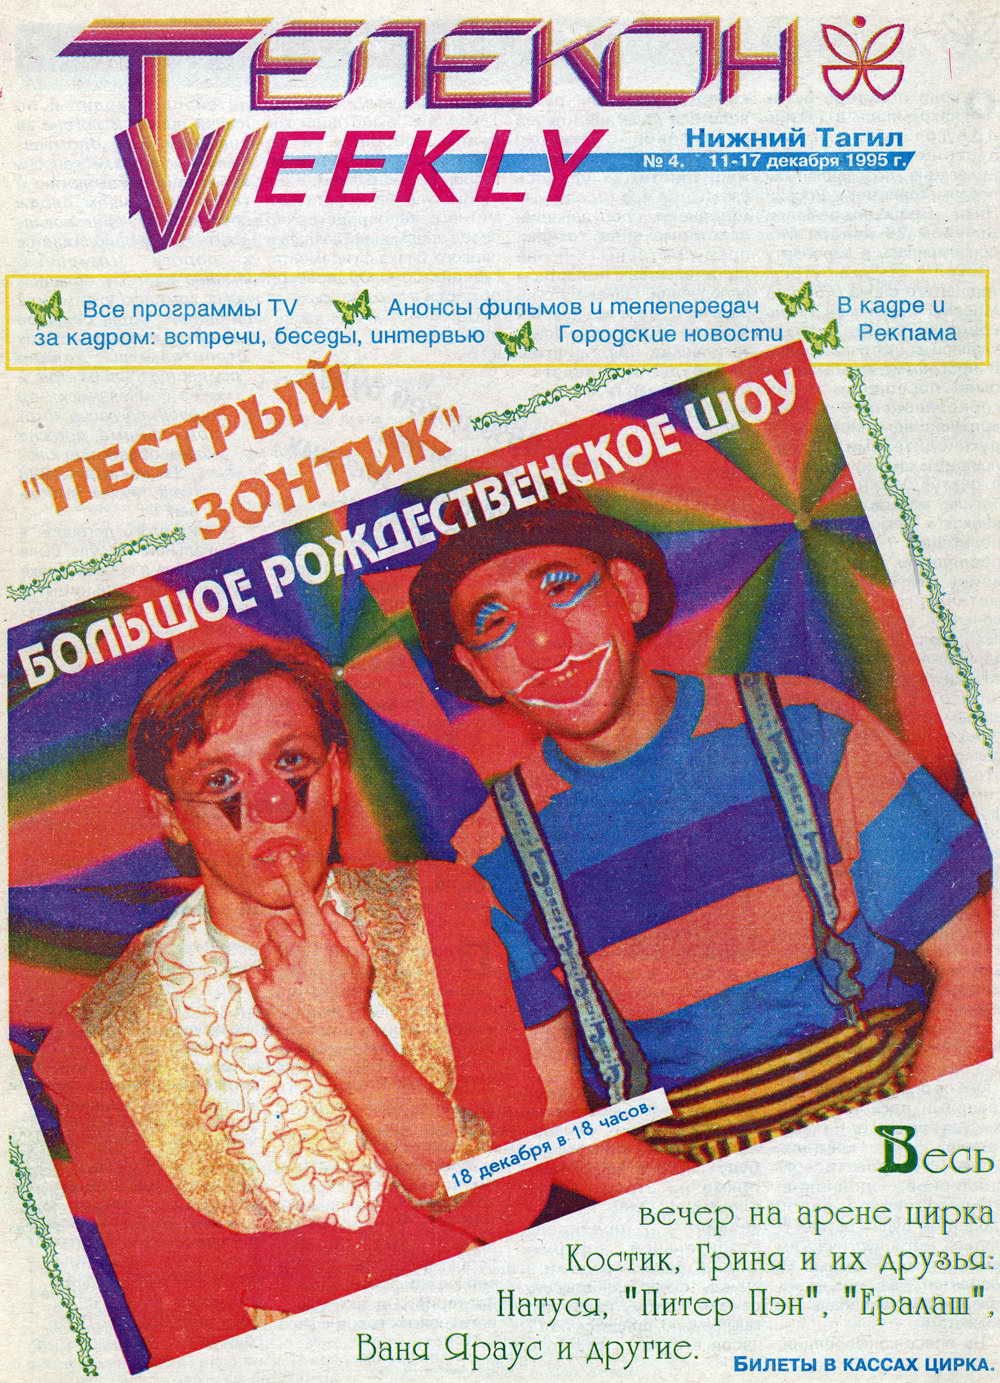    " Weekly", 4, 11-17  1995 .